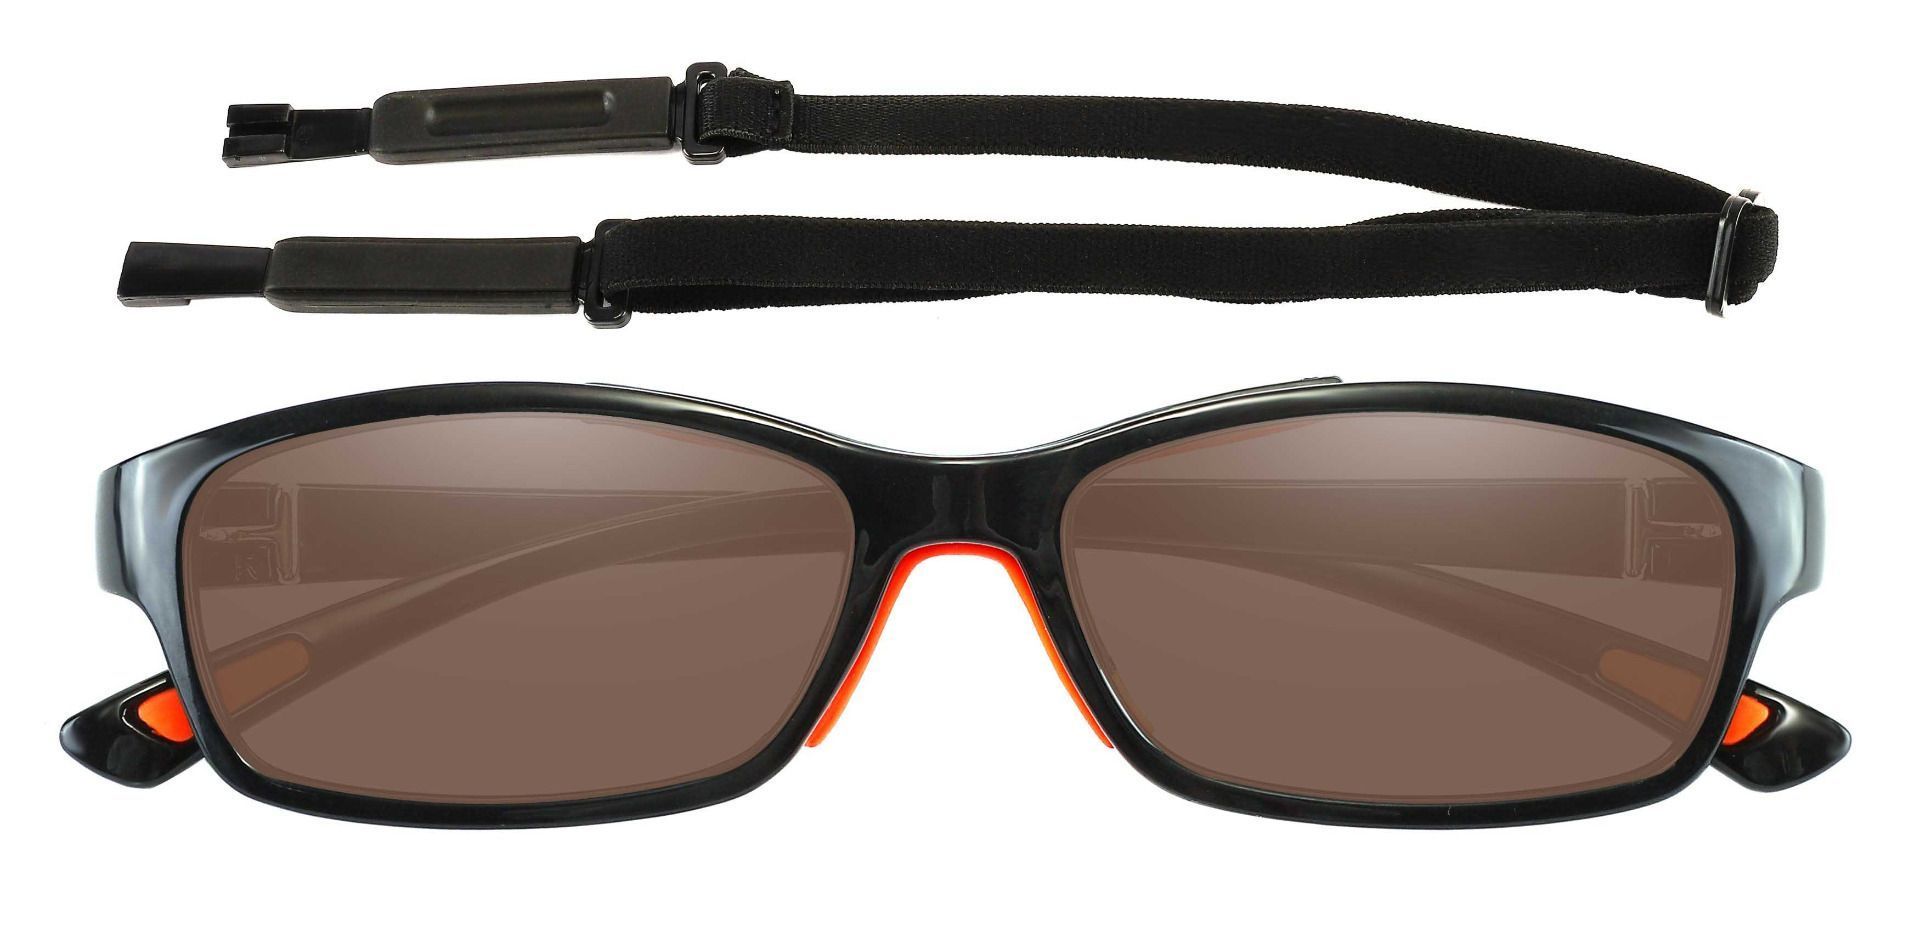 Glynn Rectangle Reading Sunglasses - Black Frame With Brown Lenses